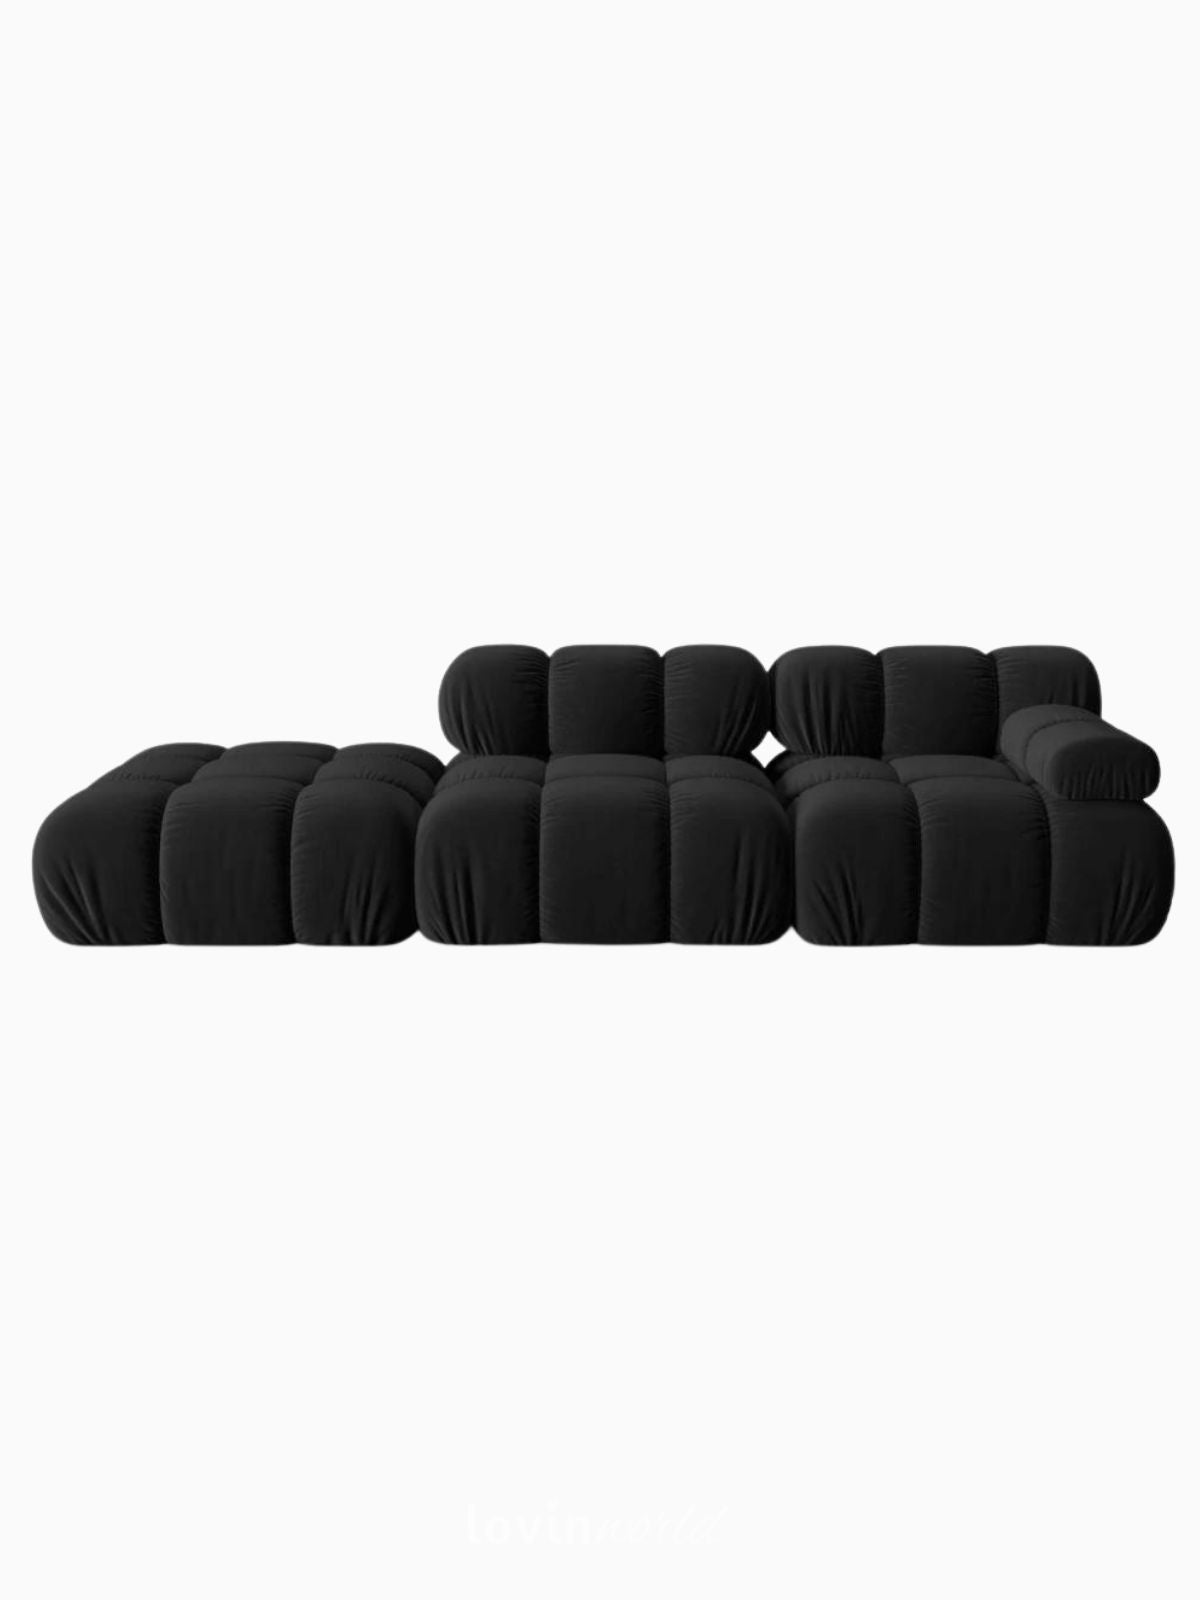 Divano modulare 4 sedute Bellis in velluto, colore nero-1